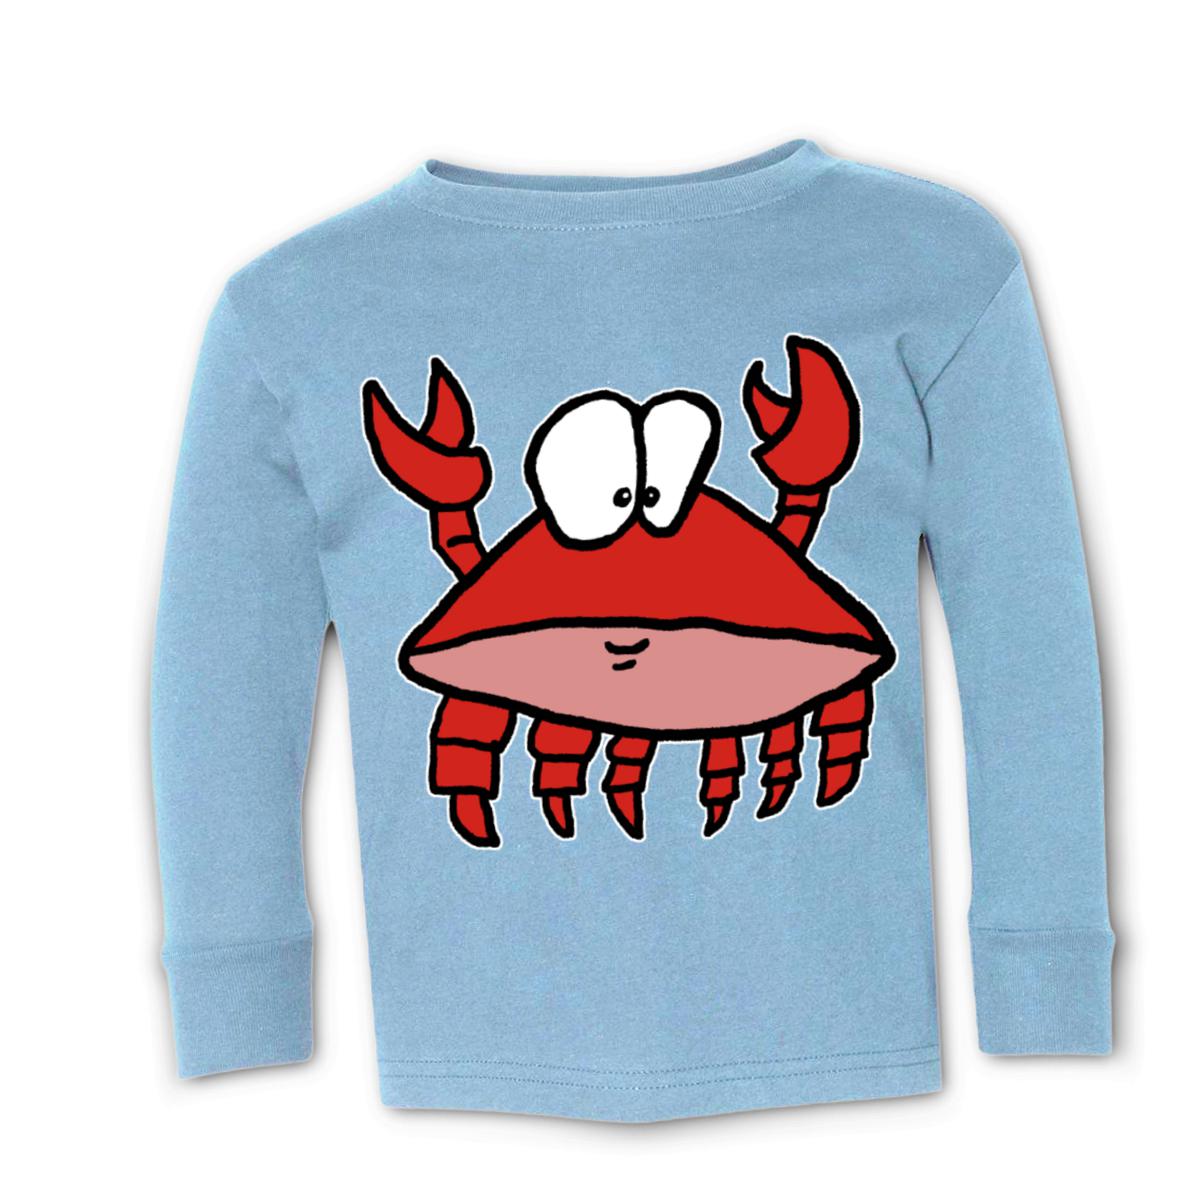 Crab 2.0 Toddler Long Sleeve Tee 4T light-blue